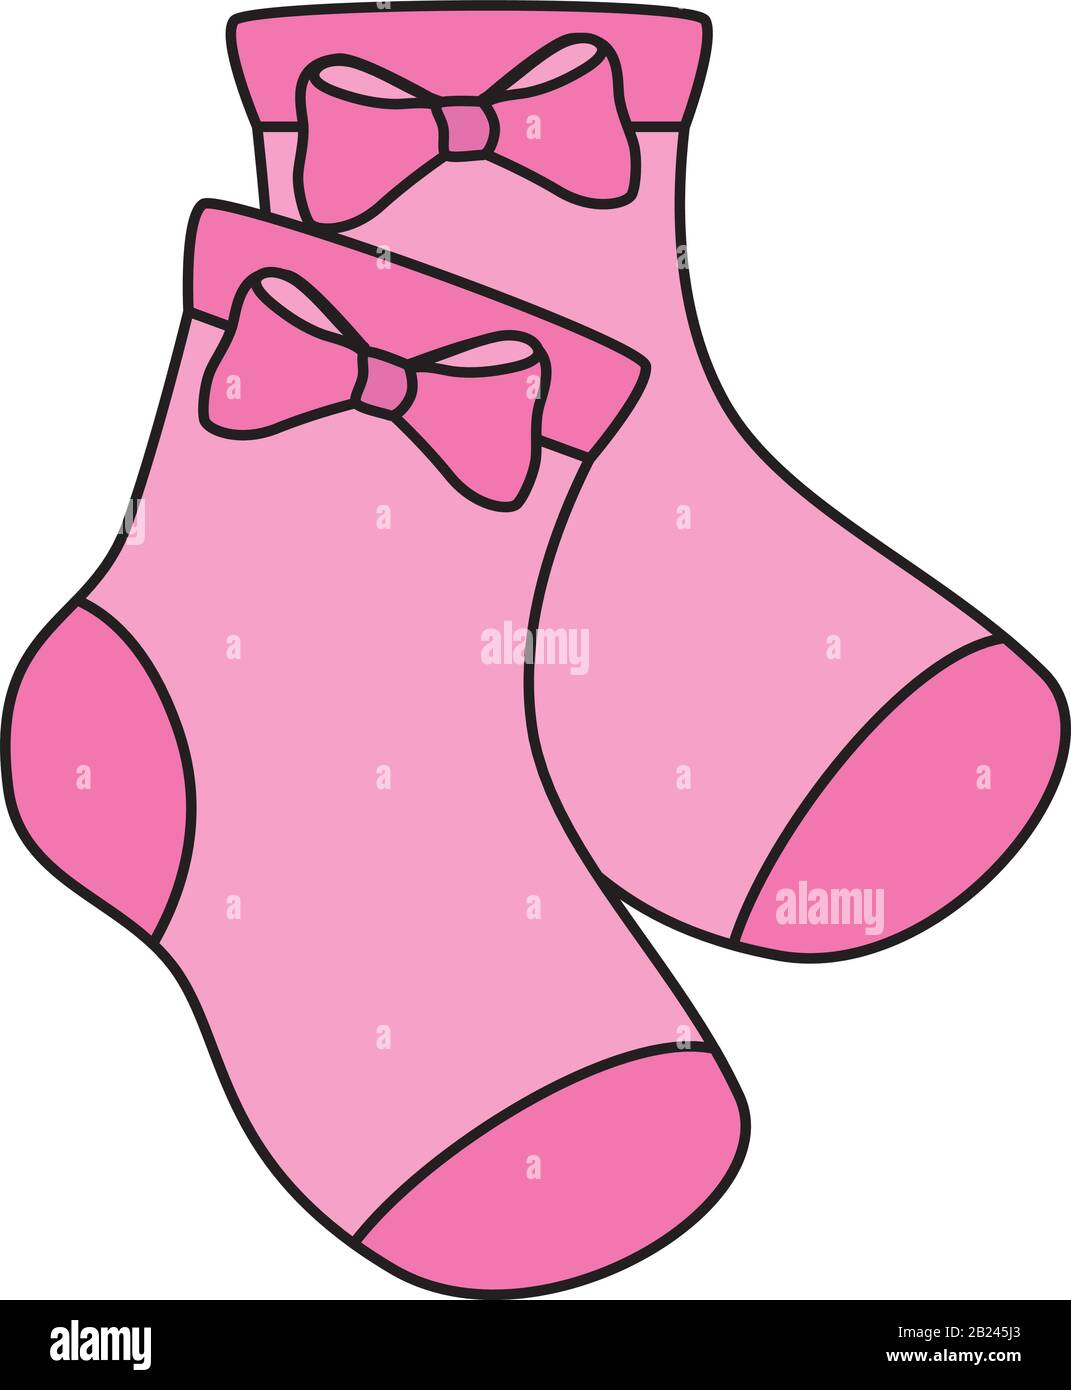 Baby Socks Cliparts, Stock Vector and Royalty Free Baby Socks Illustrations